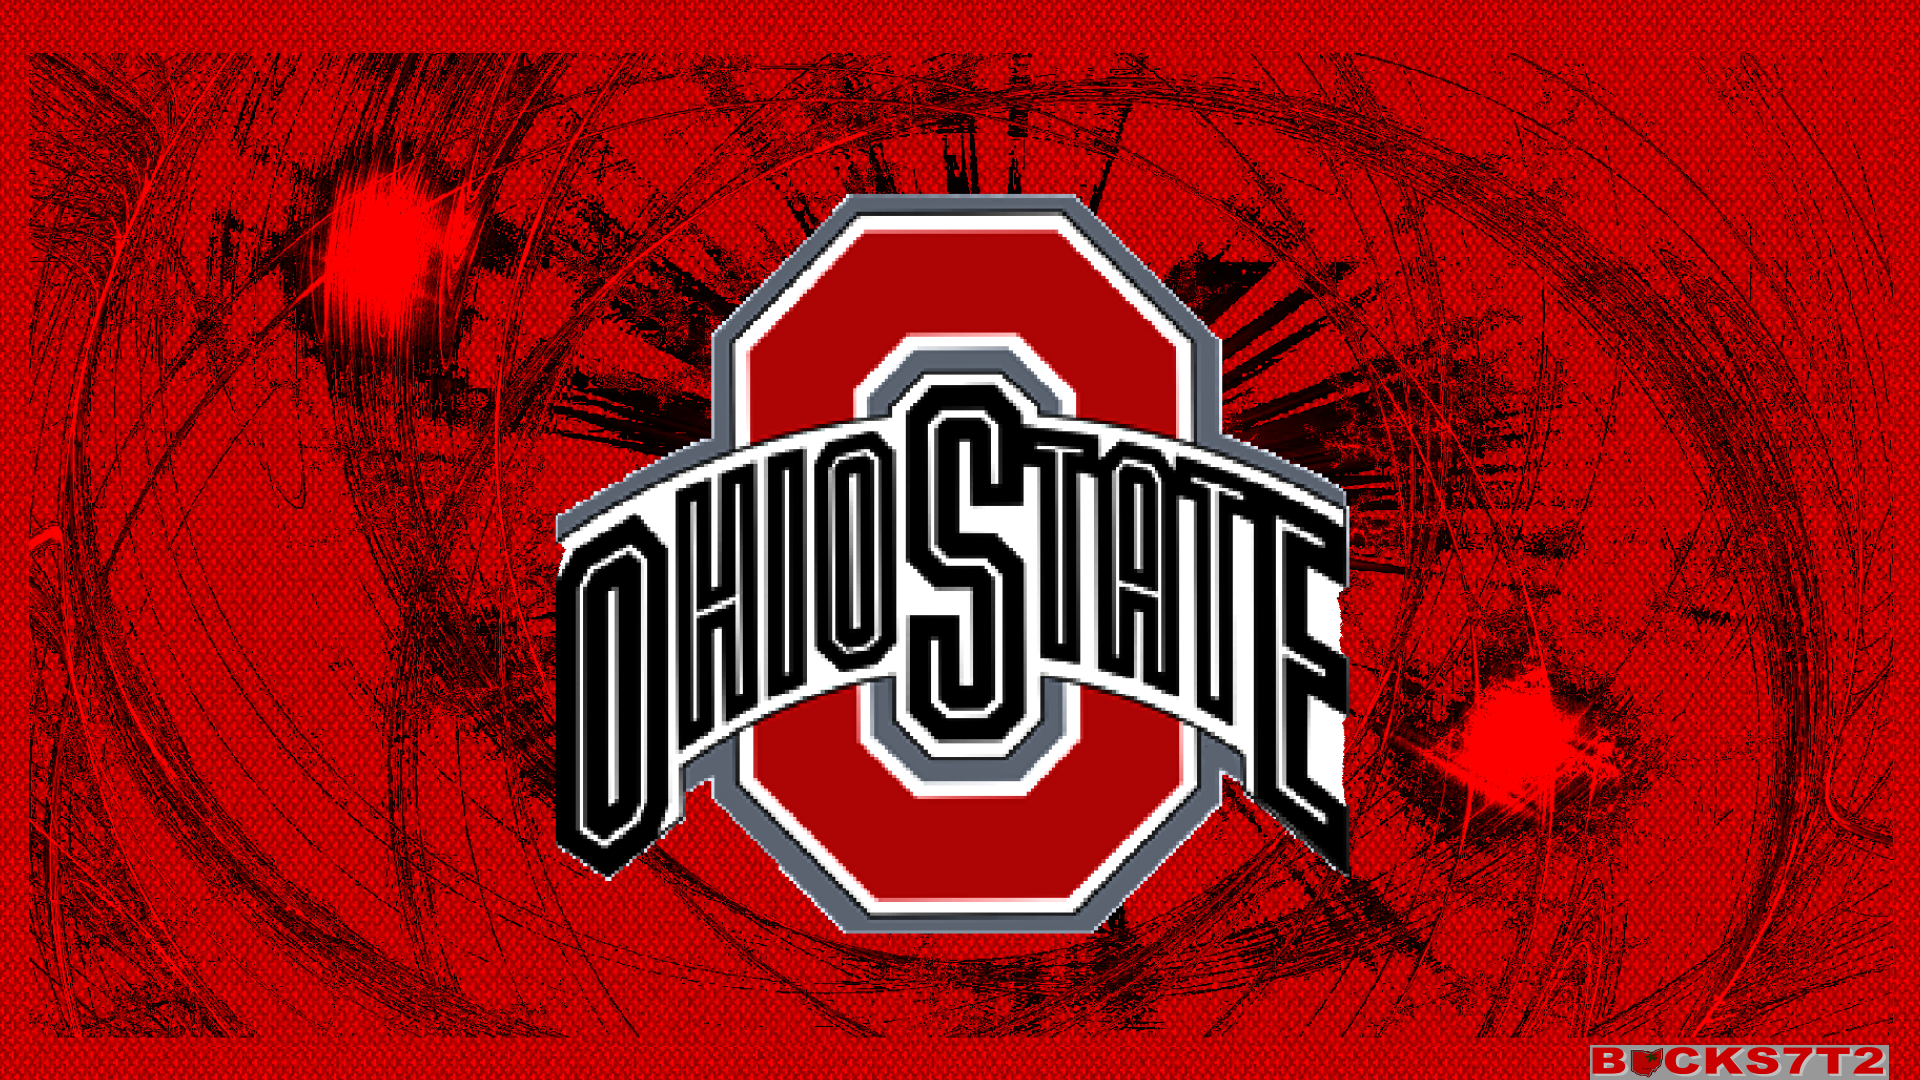 RED BLOCK O OHIO STATE - Ohio State University Basketball Wallpaper  (29347771) - Fanpop